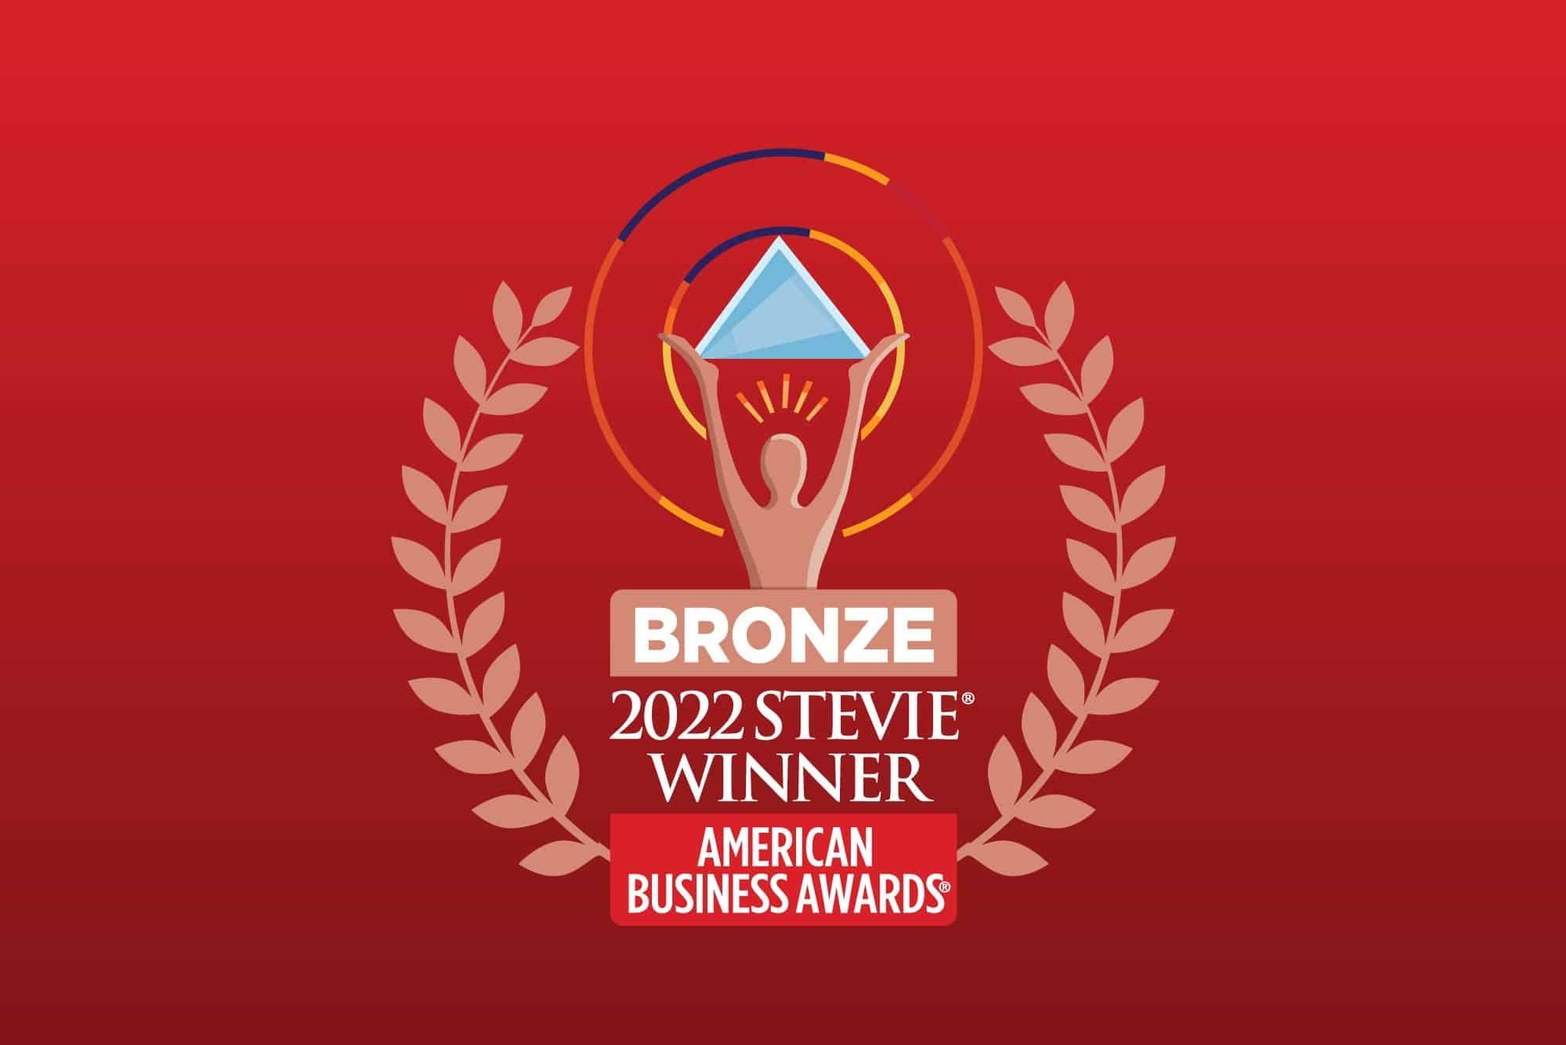 DISRUPTIVE HONORED AS BRONZE STEVIE® AWARD WINNER IN 2022 AMERICAN